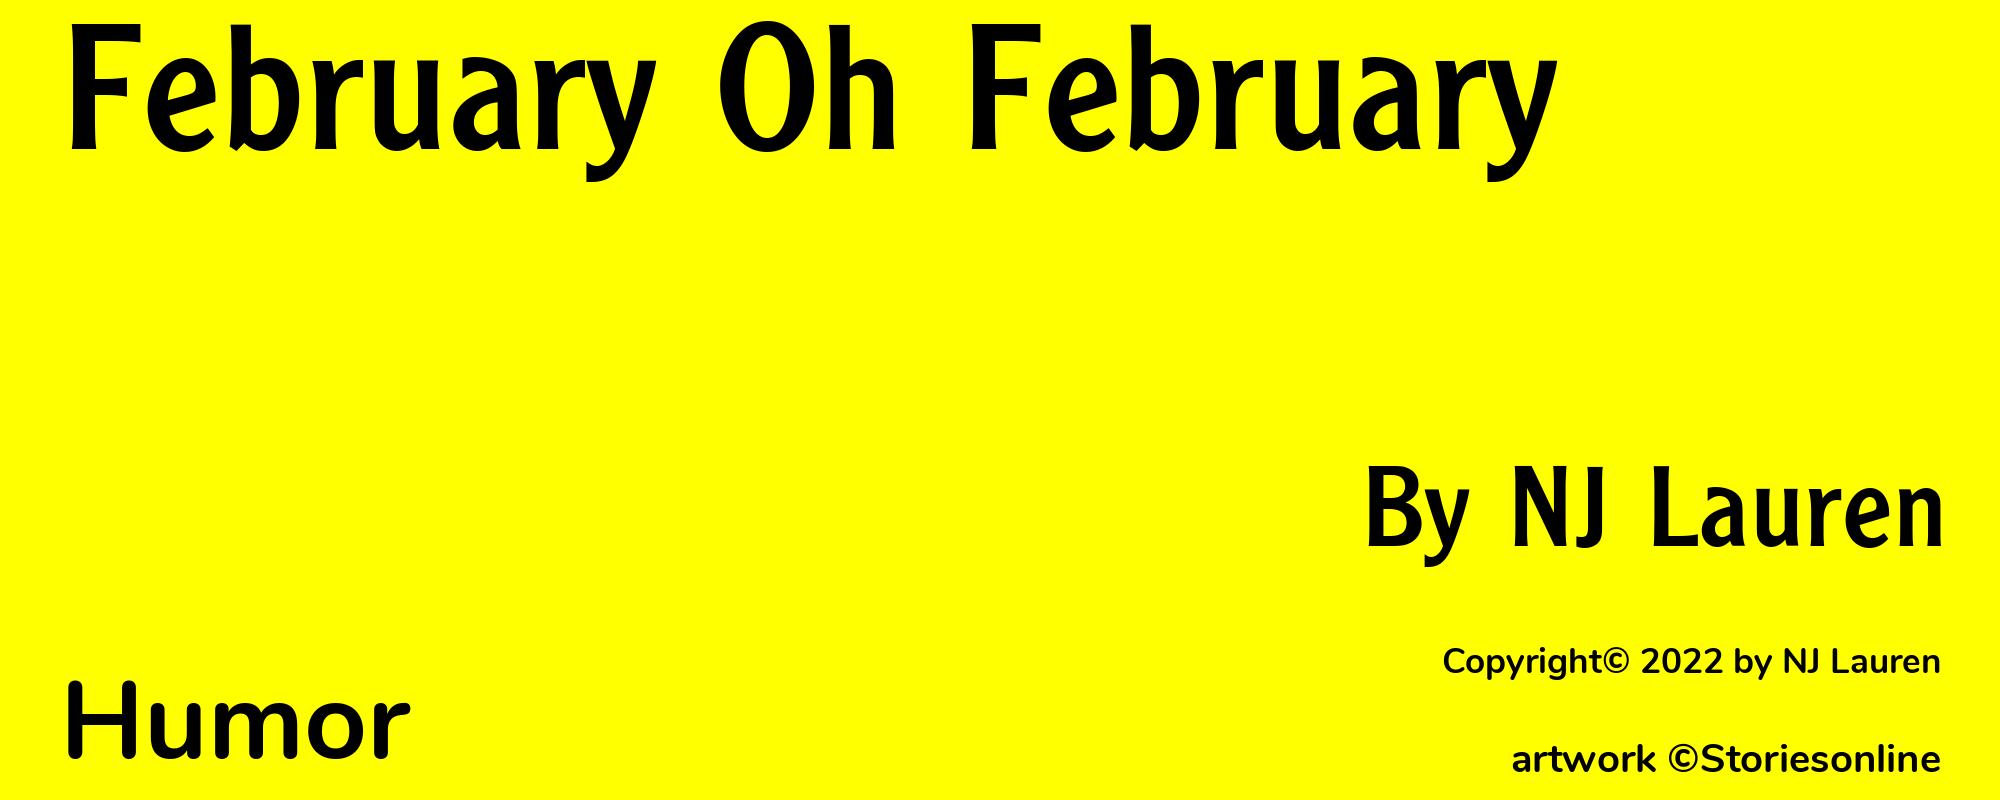 February Oh February - Cover